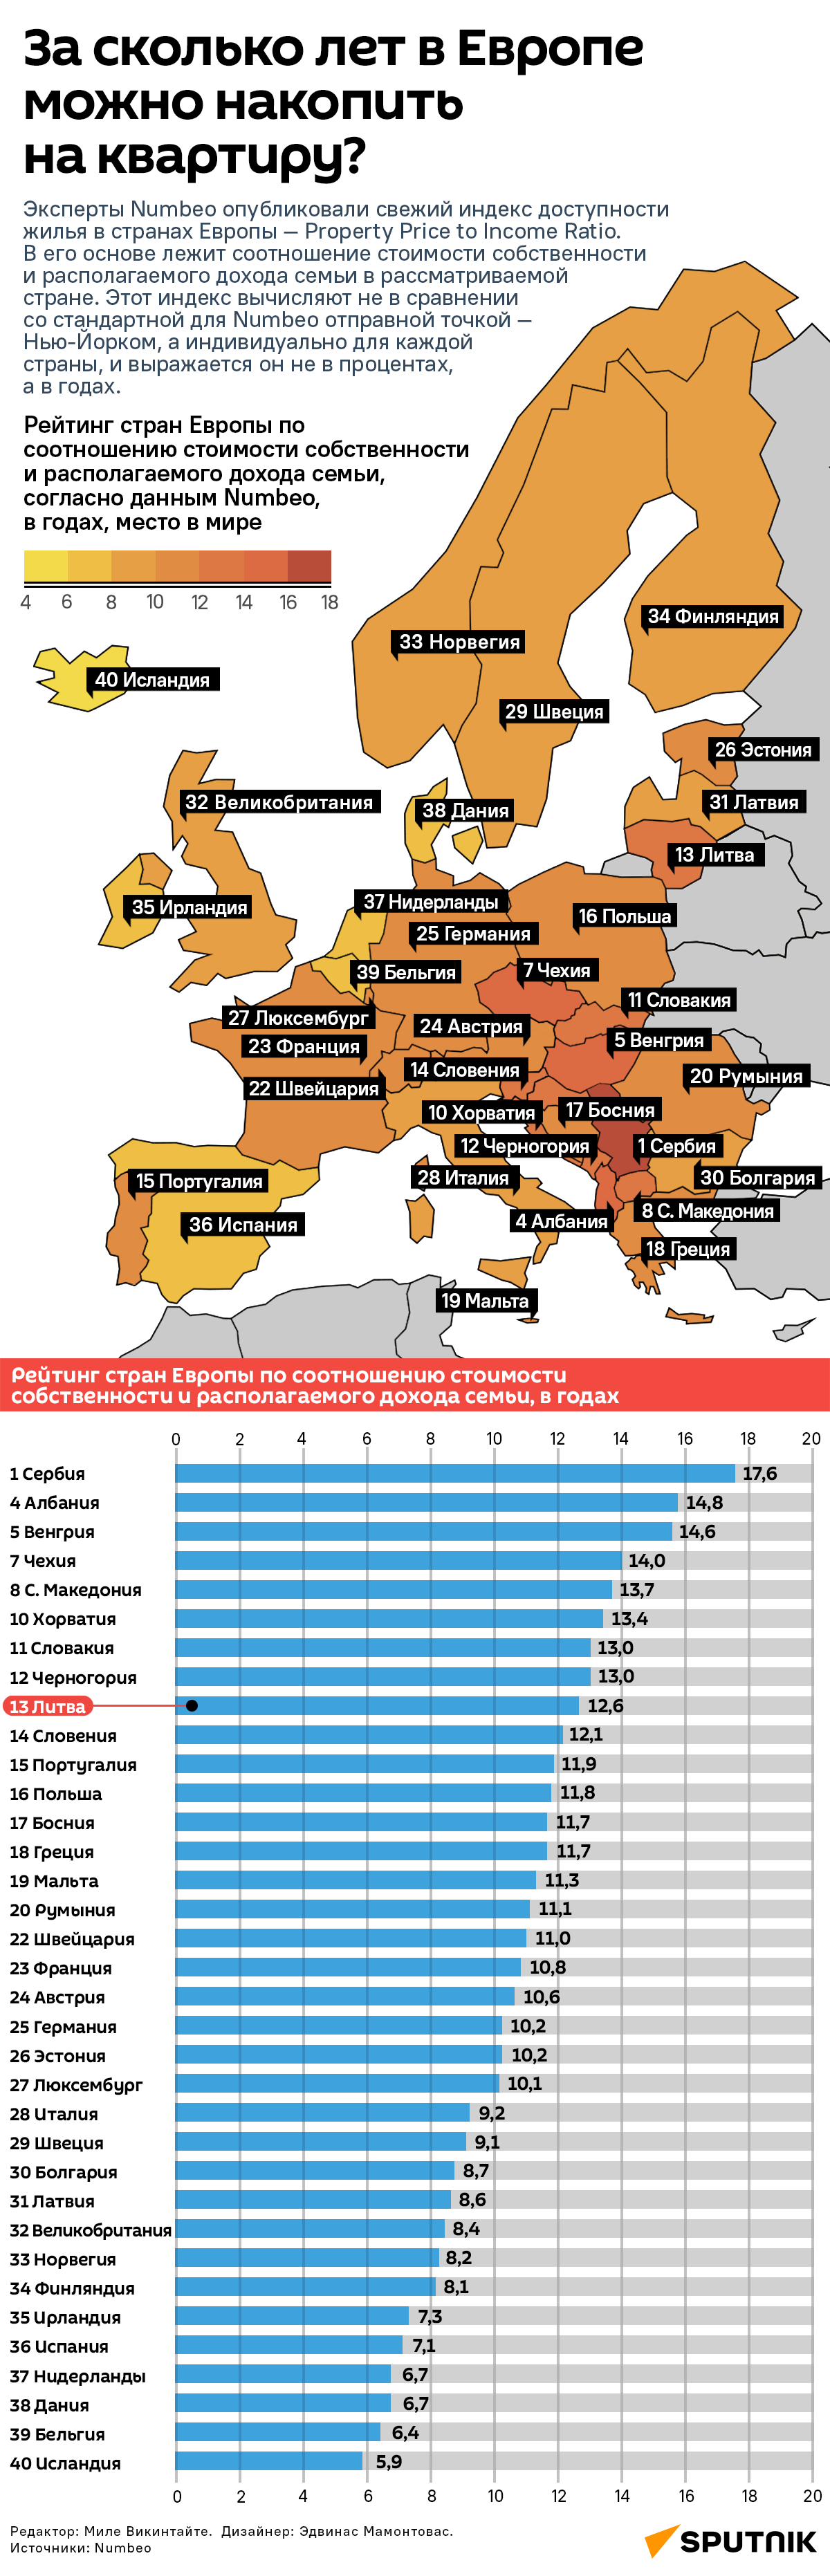 За сколько лет в Европе можно накопить на квартиру? - Sputnik Литва